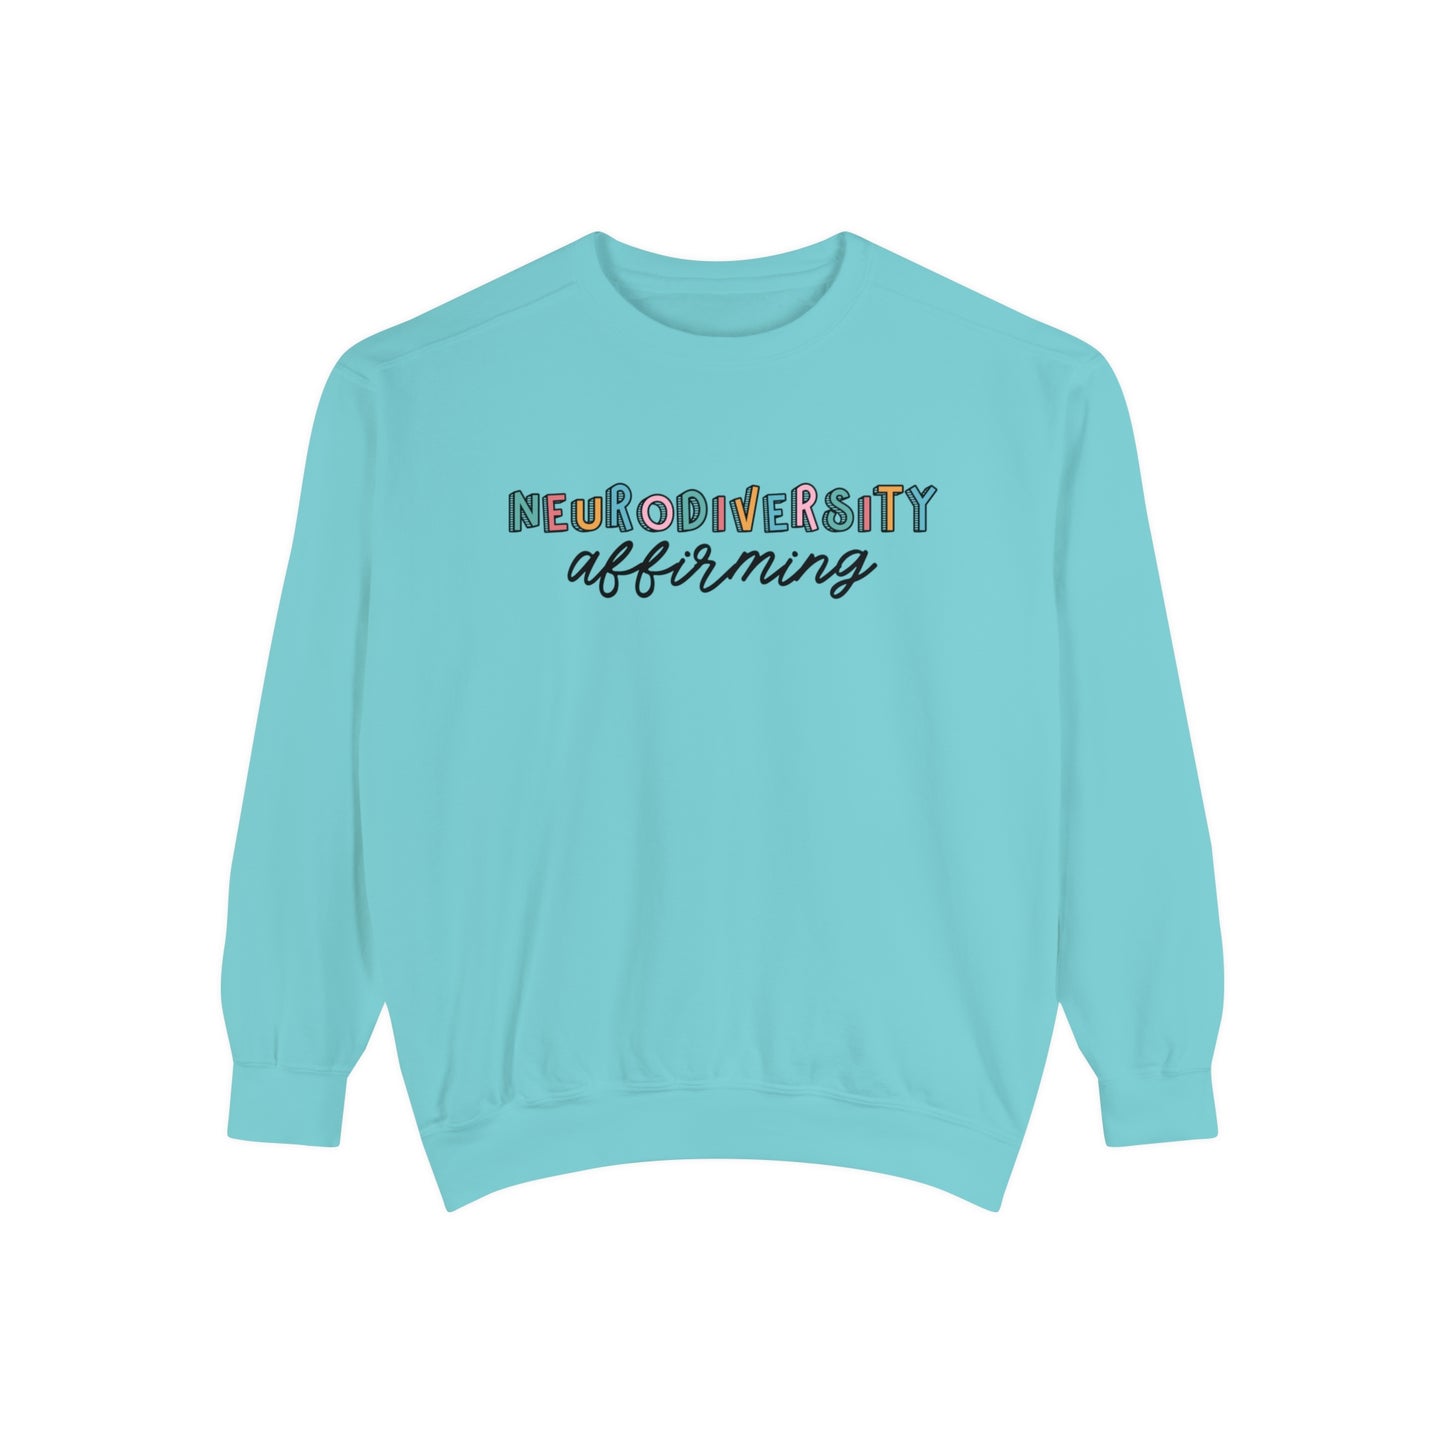 Neurodiversity Affirming Comfort Colors Sweatshirt